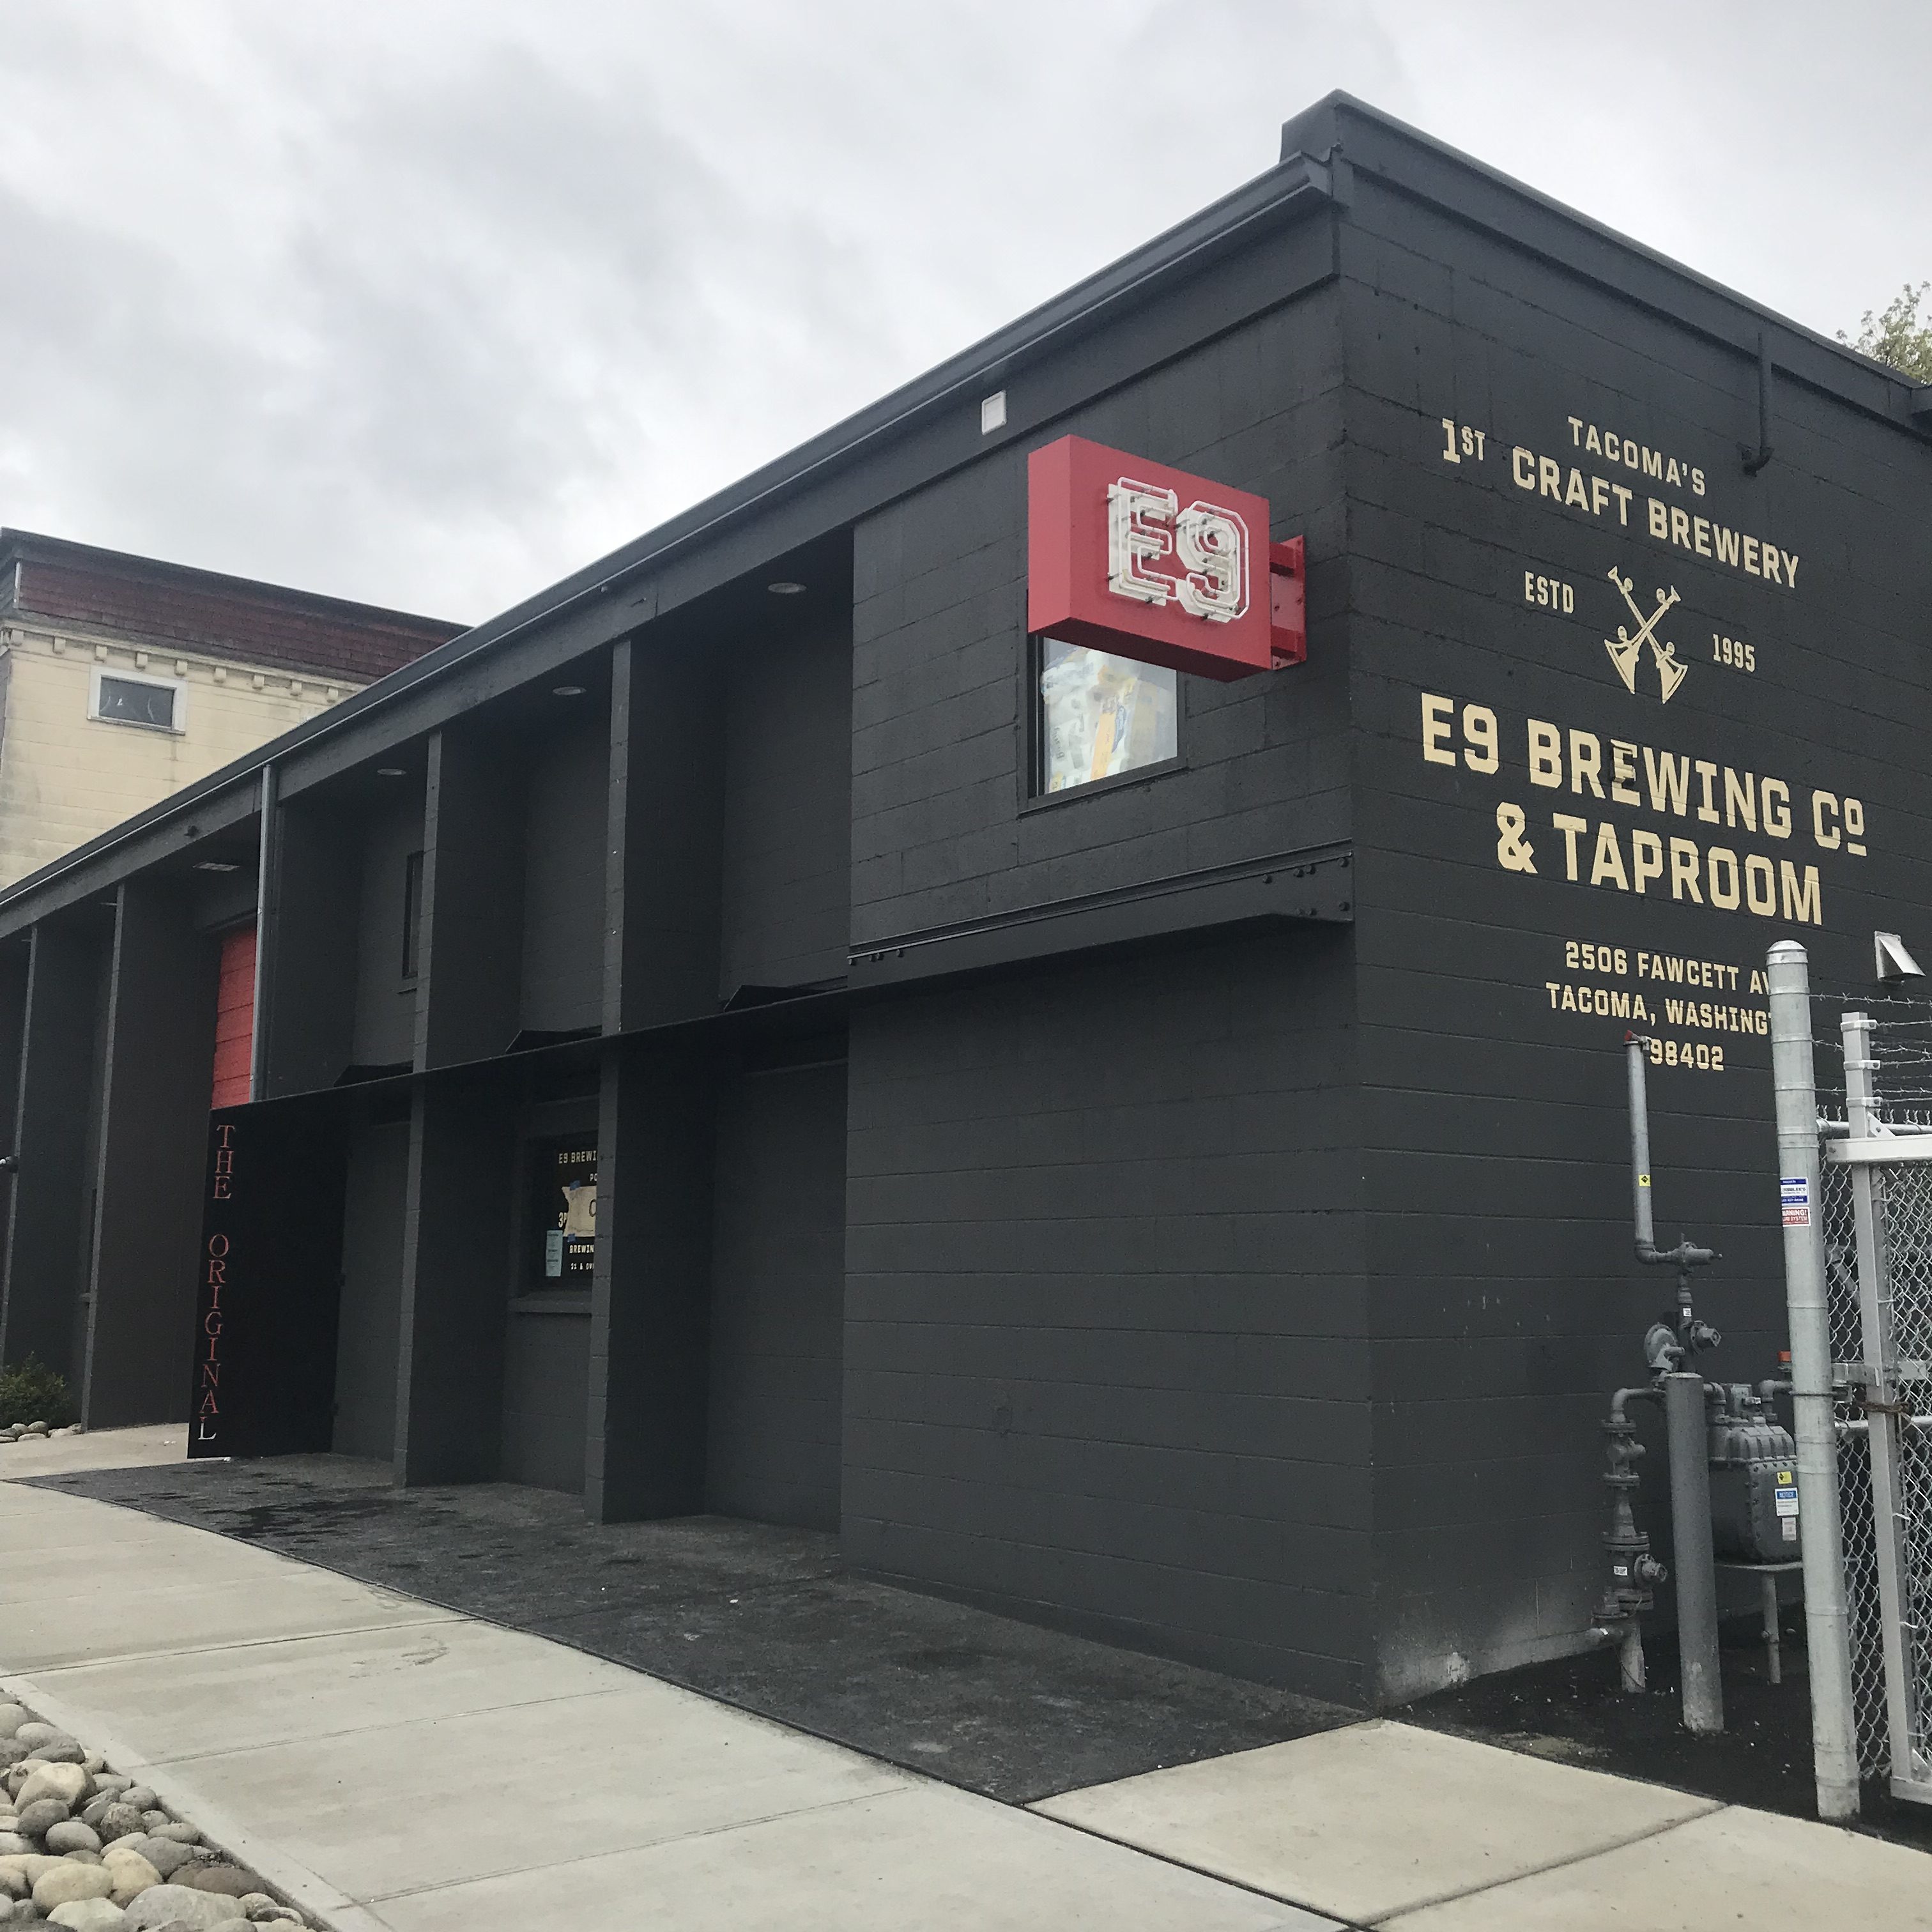 E9 Brewing Co. & Taproom located in Tacoma, Washington. (image courtesy of E9 Brewing Co.)